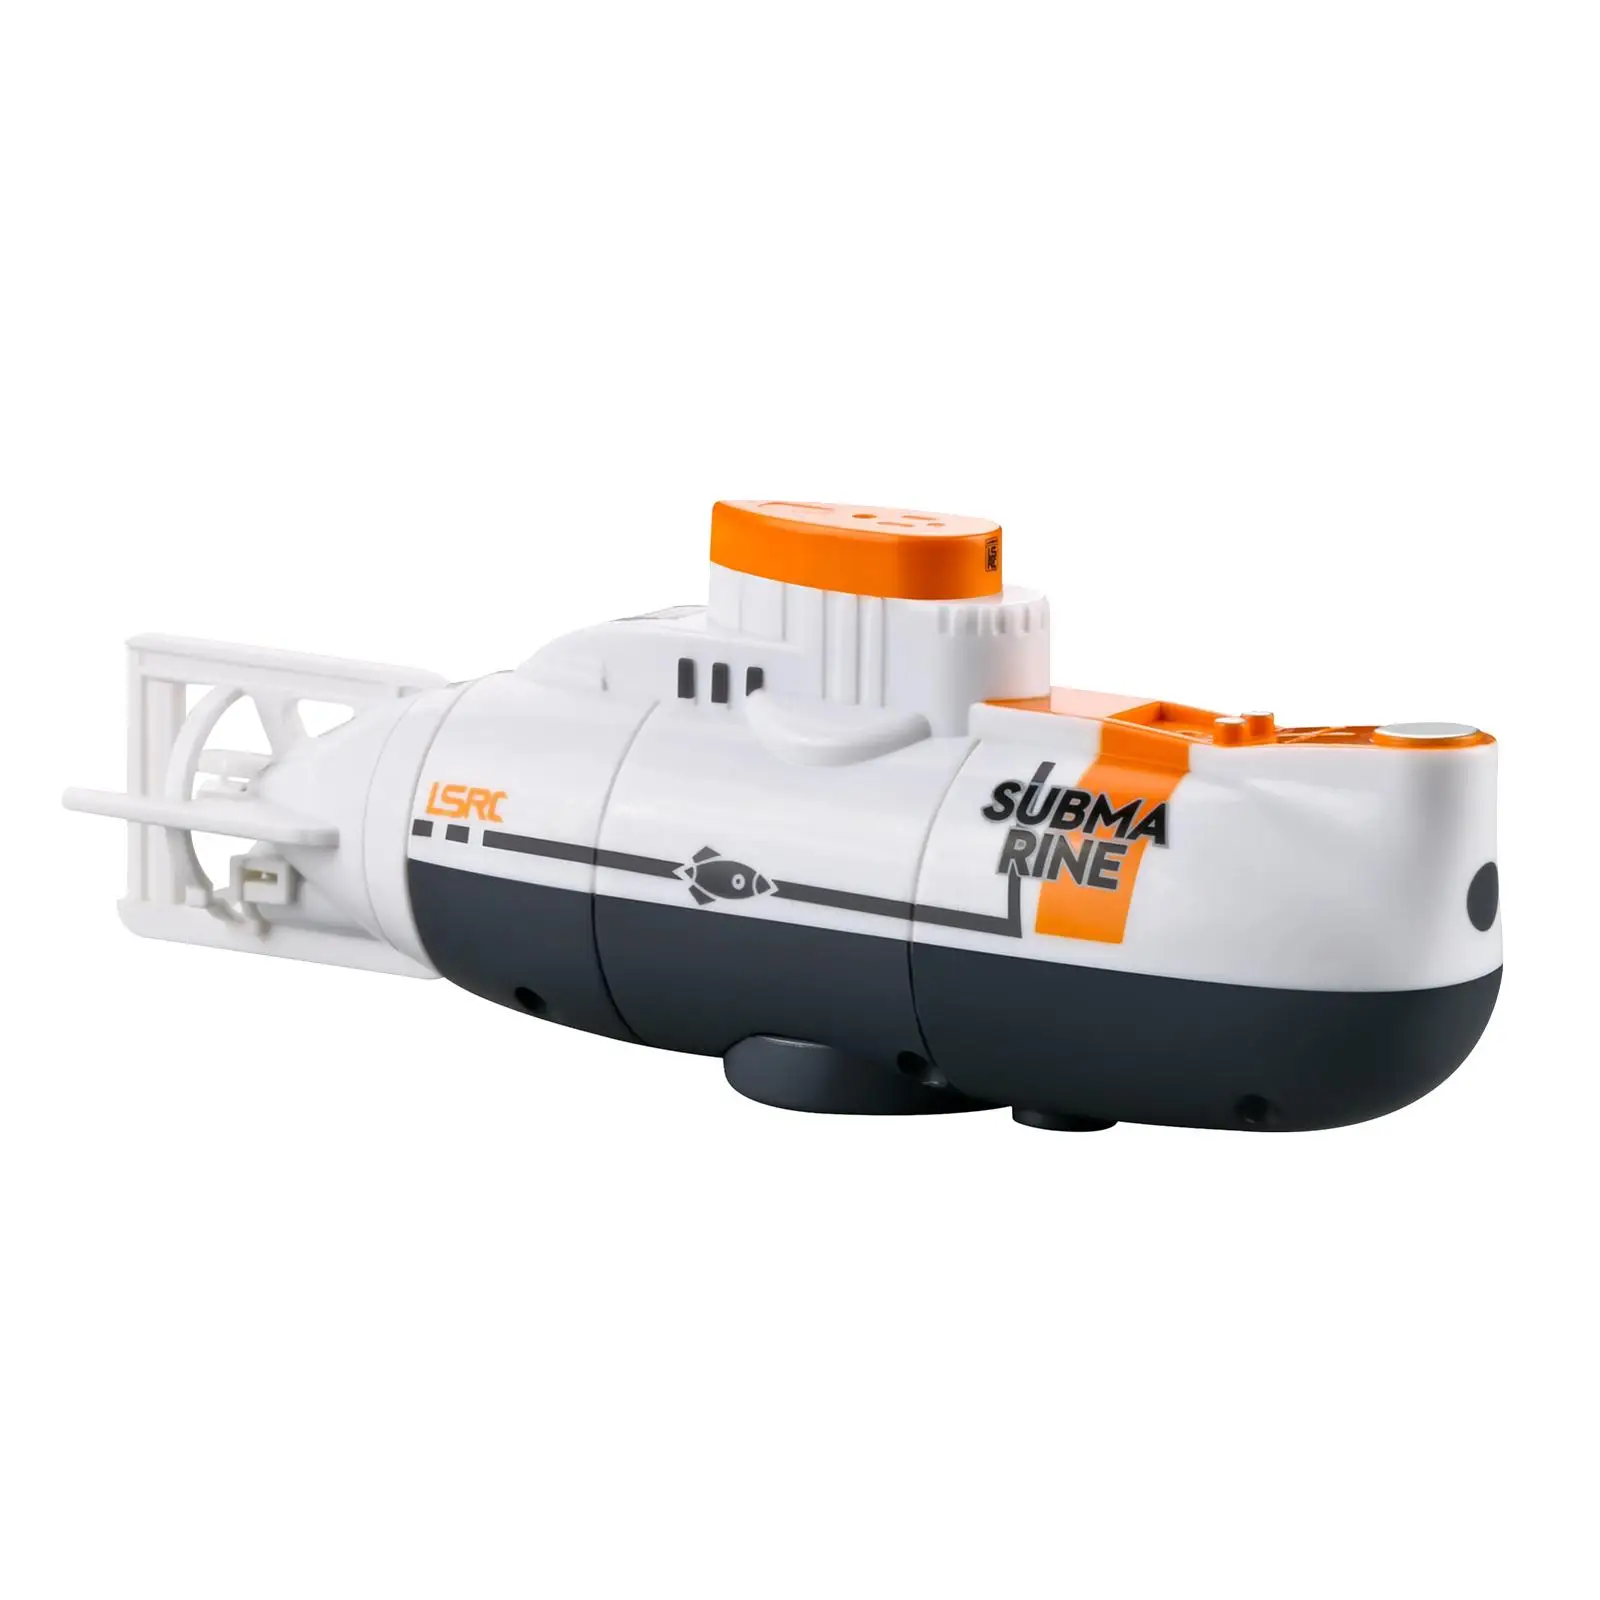 Create Toys Mini RC Submarine 0.1m/s Speed Swim Simulation Watercraft Toy